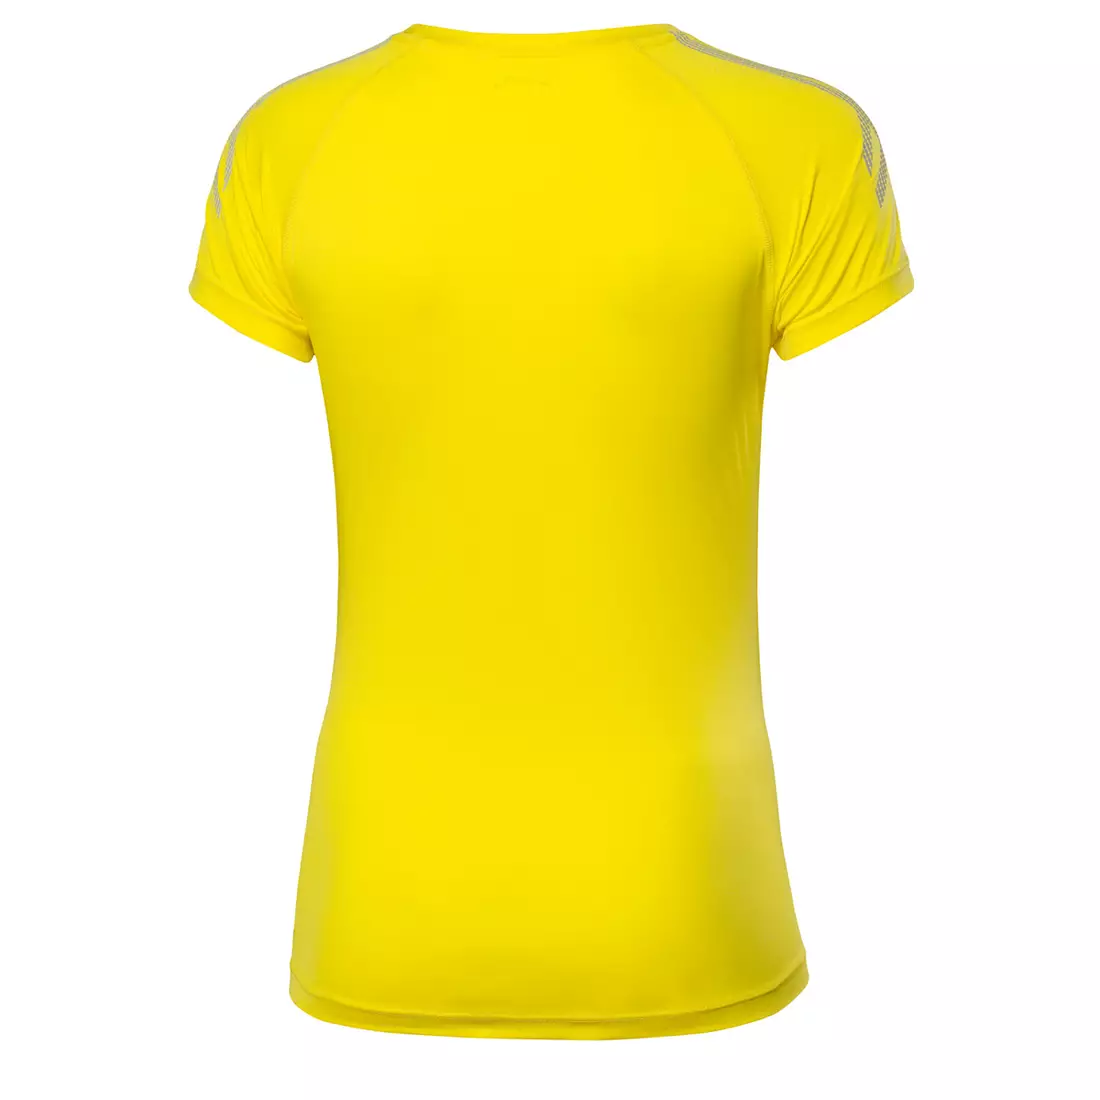 ASICS 339907-0343 TIGER TEE - women's running T-shirt, color: Yellow